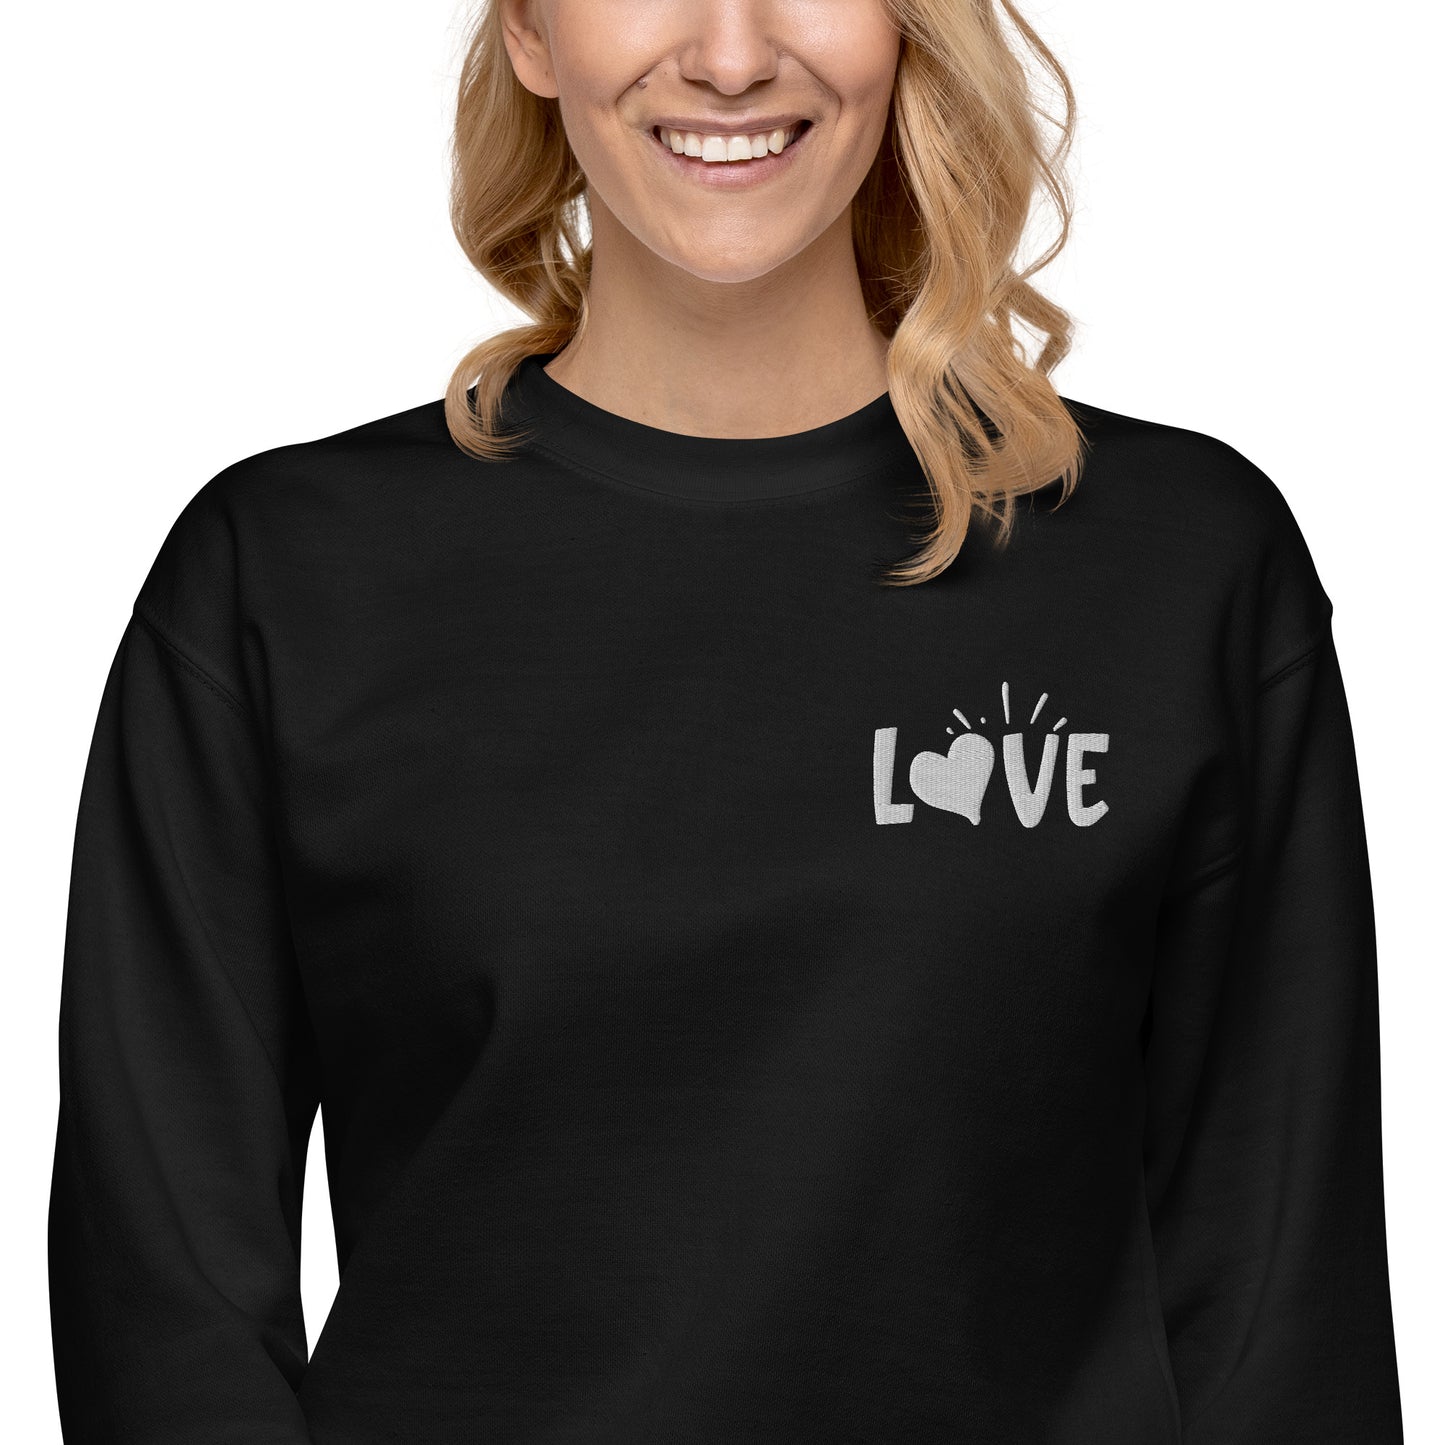 Love Embroidered White Unisex Premium Sweatshirt